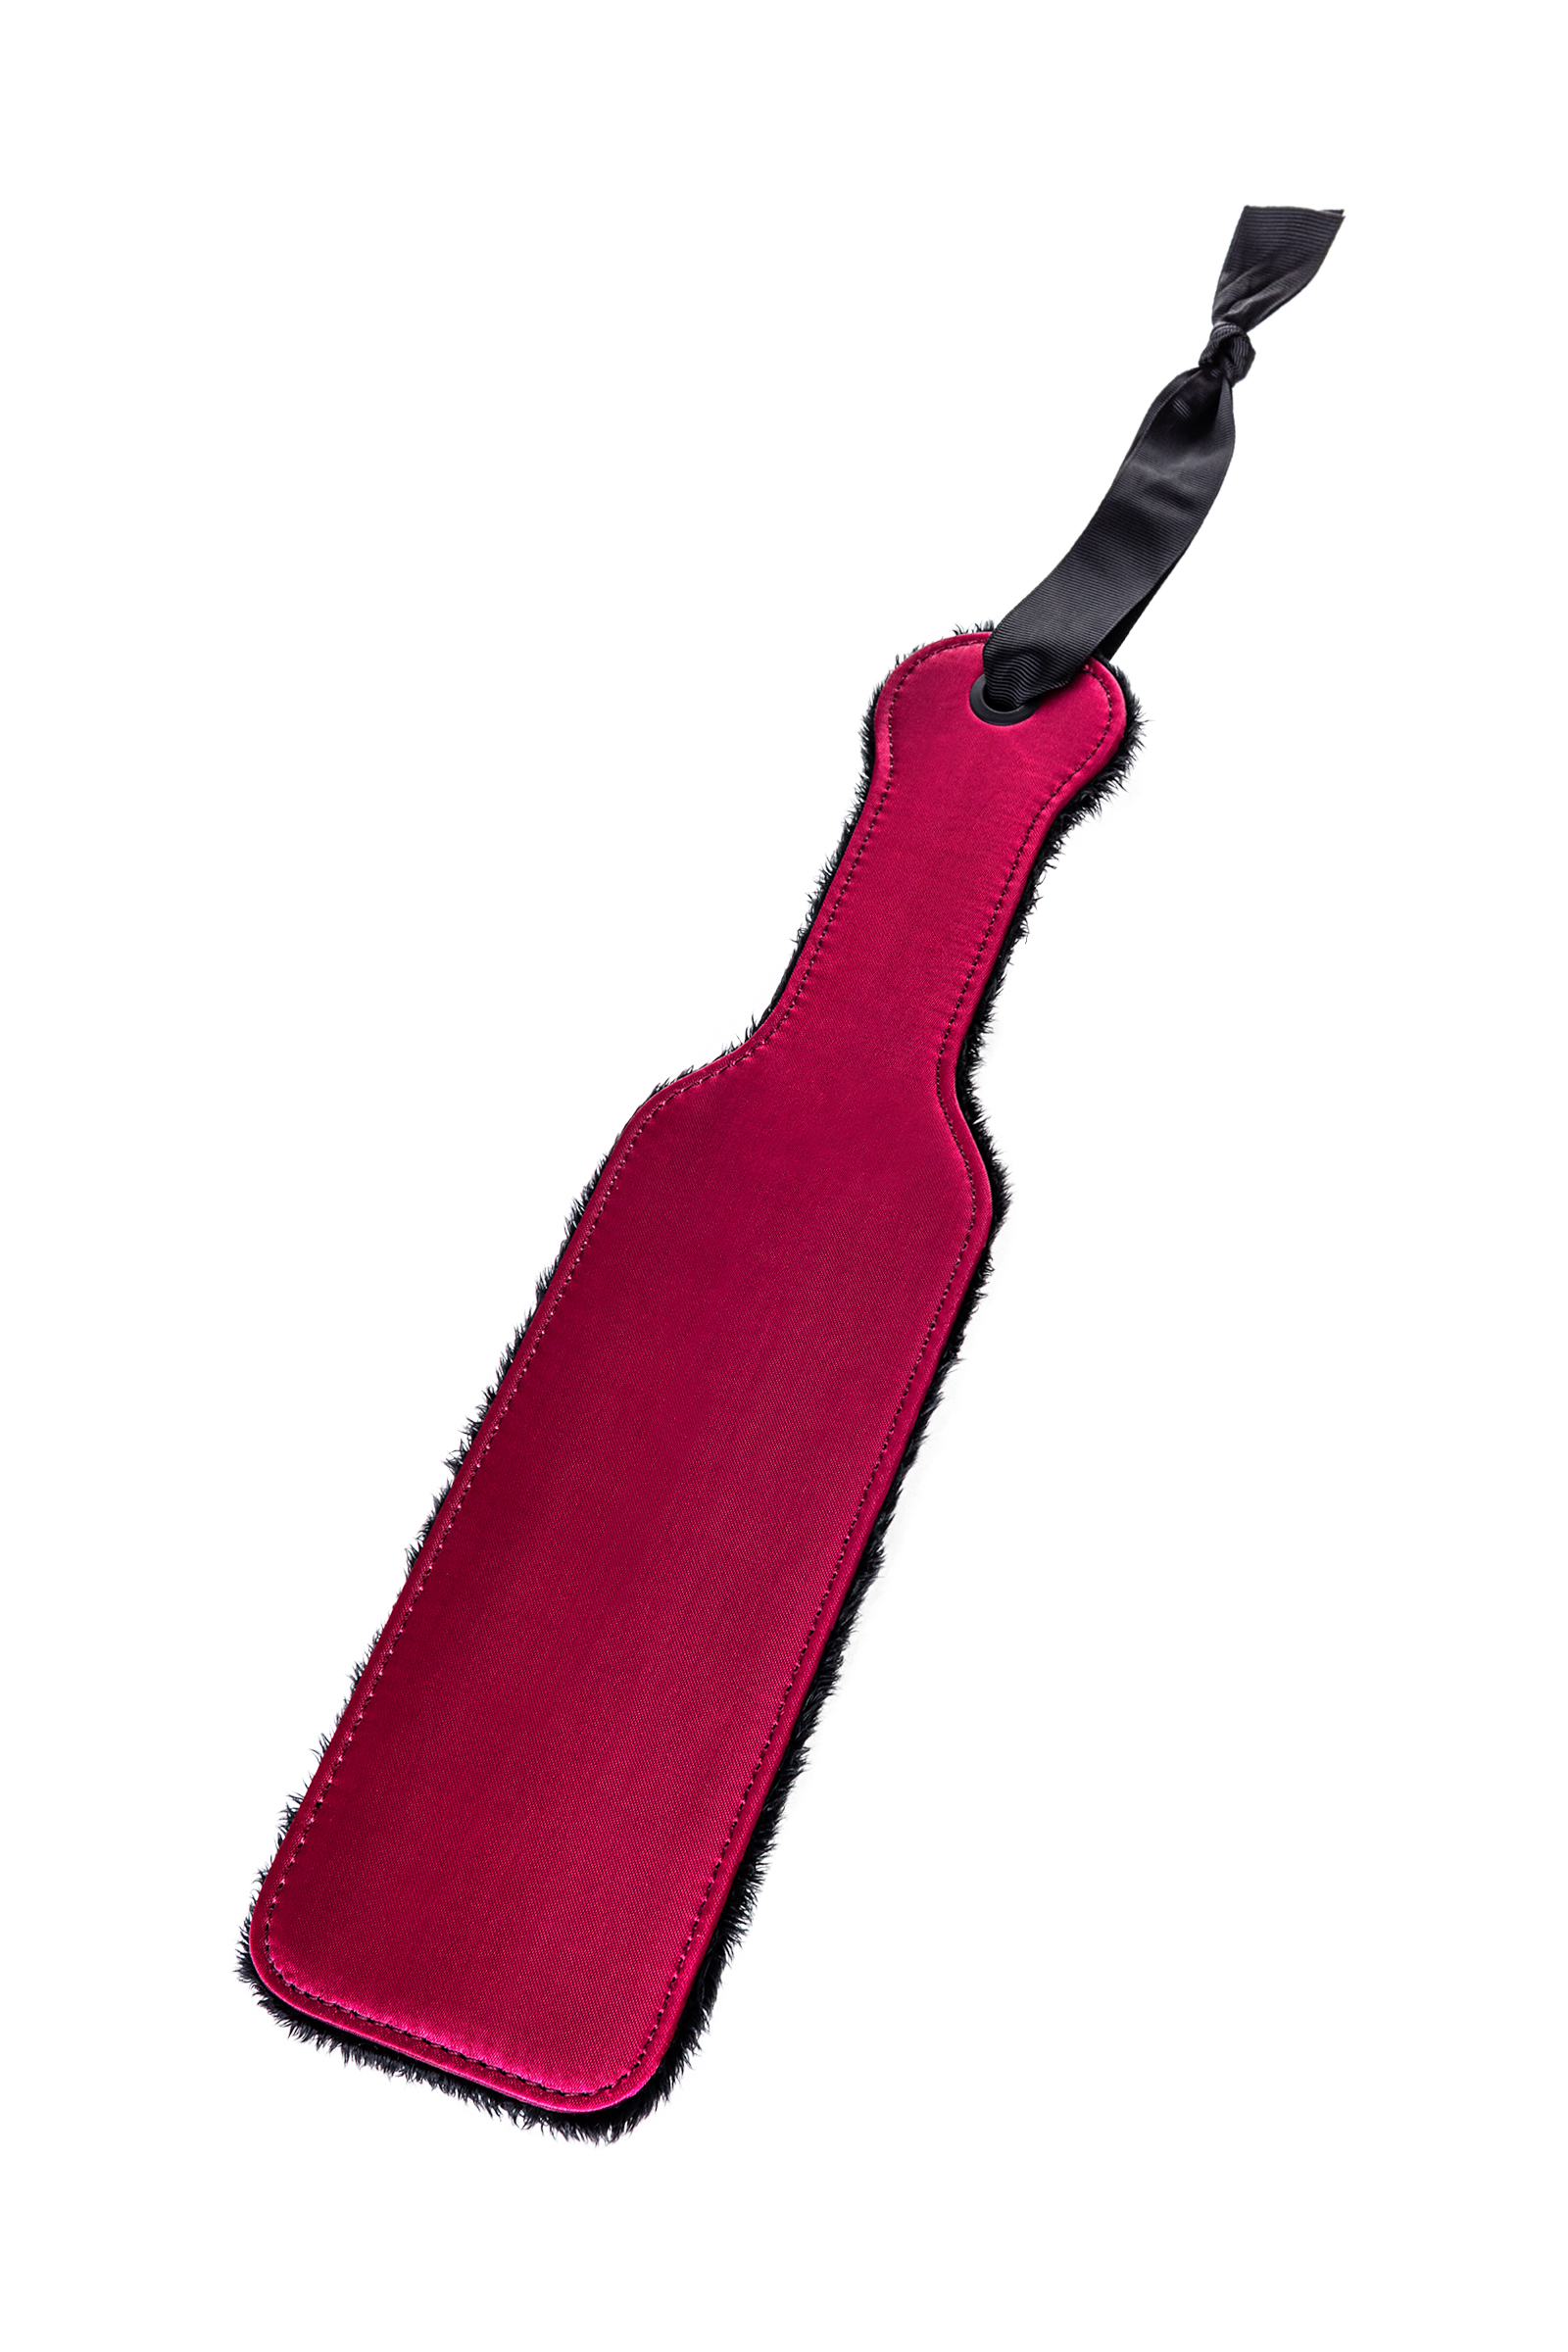 Шлепалка Anonymo #0009, полиэстер, красная, 37 см. Фото N5